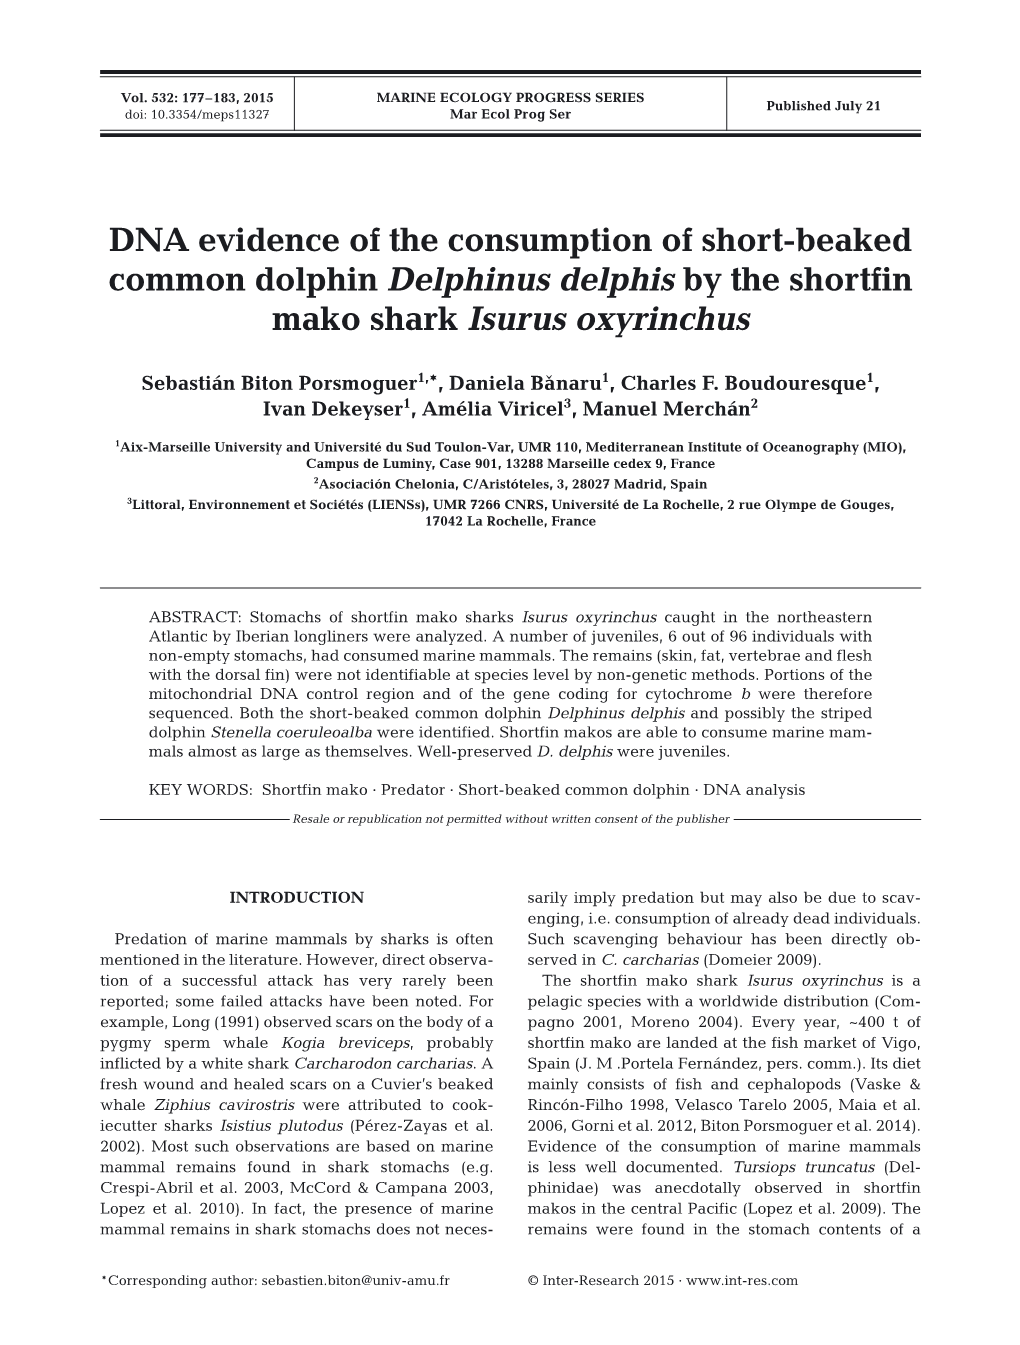 DNA Evidence of the Consumption of Short-Beaked Common Dolphin Delphinus Delphis by the Shortfin Mako Shark Isurus Oxyrinchus